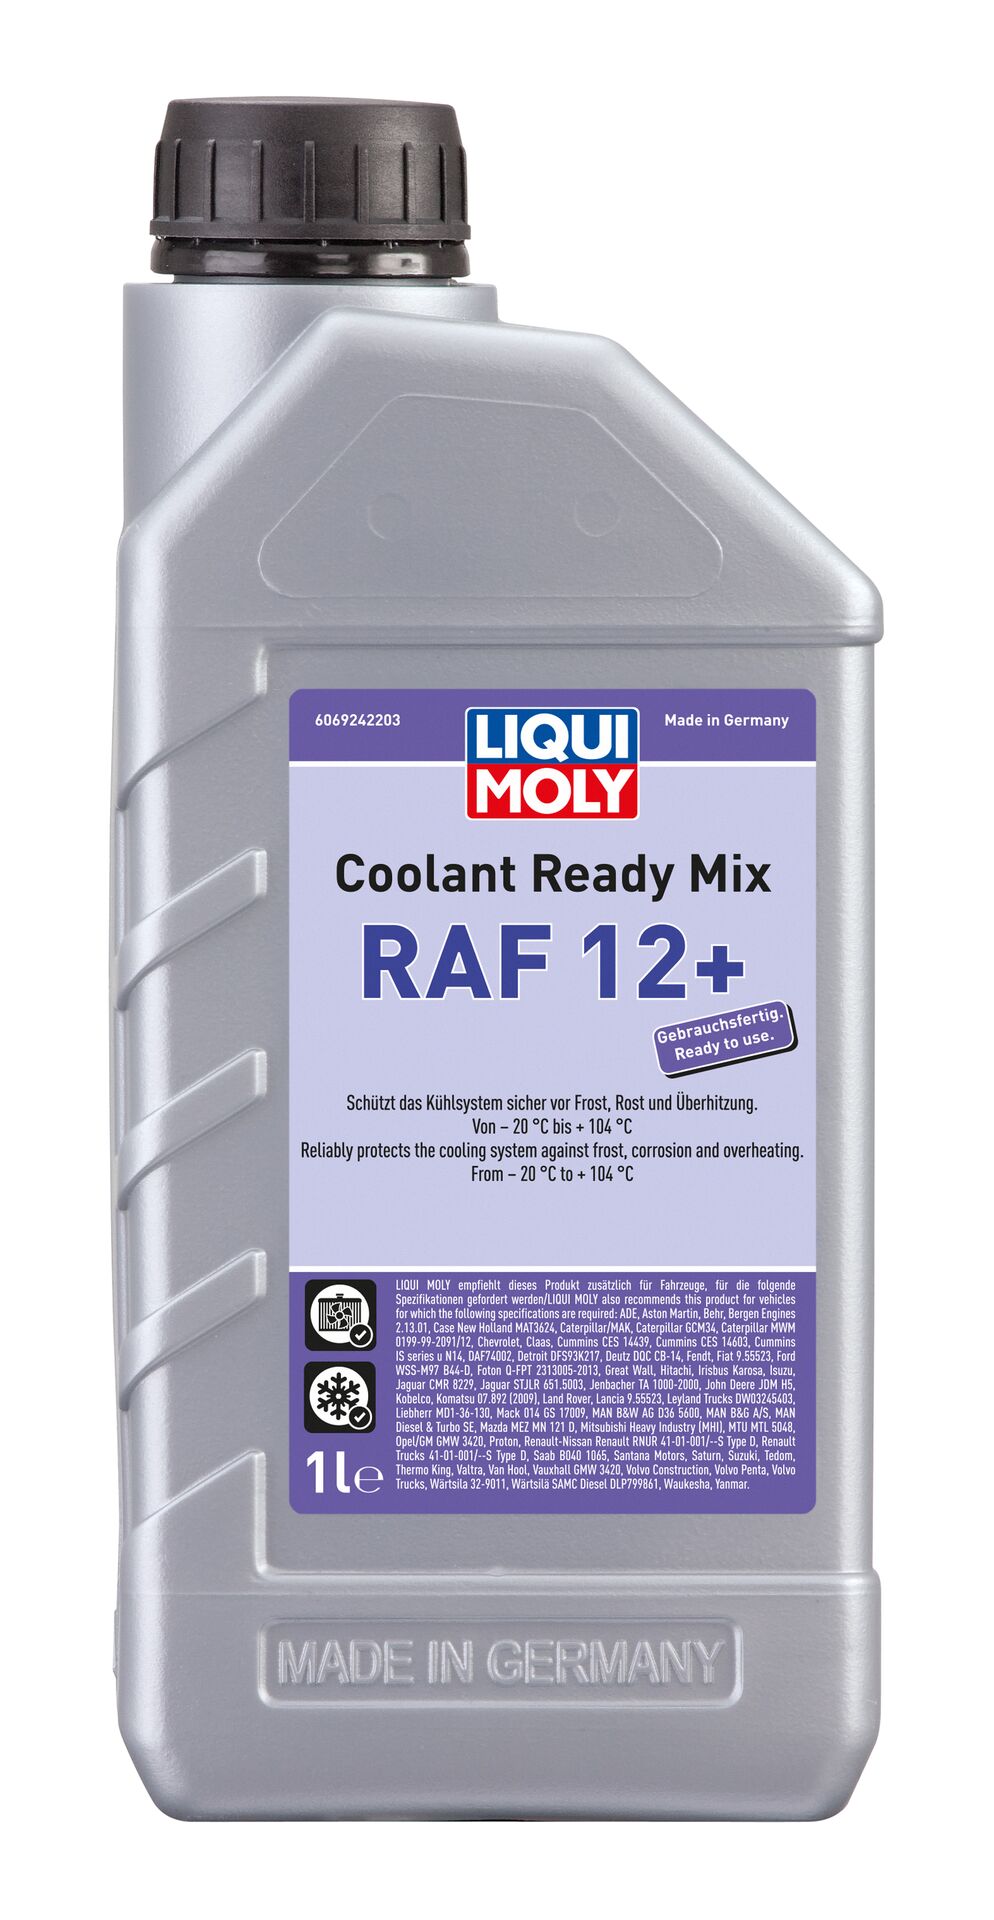 Liqui Moly Kühlerfrostschutz Coolant Ready Mix RAF12 Plus Fertiggemisch 1L